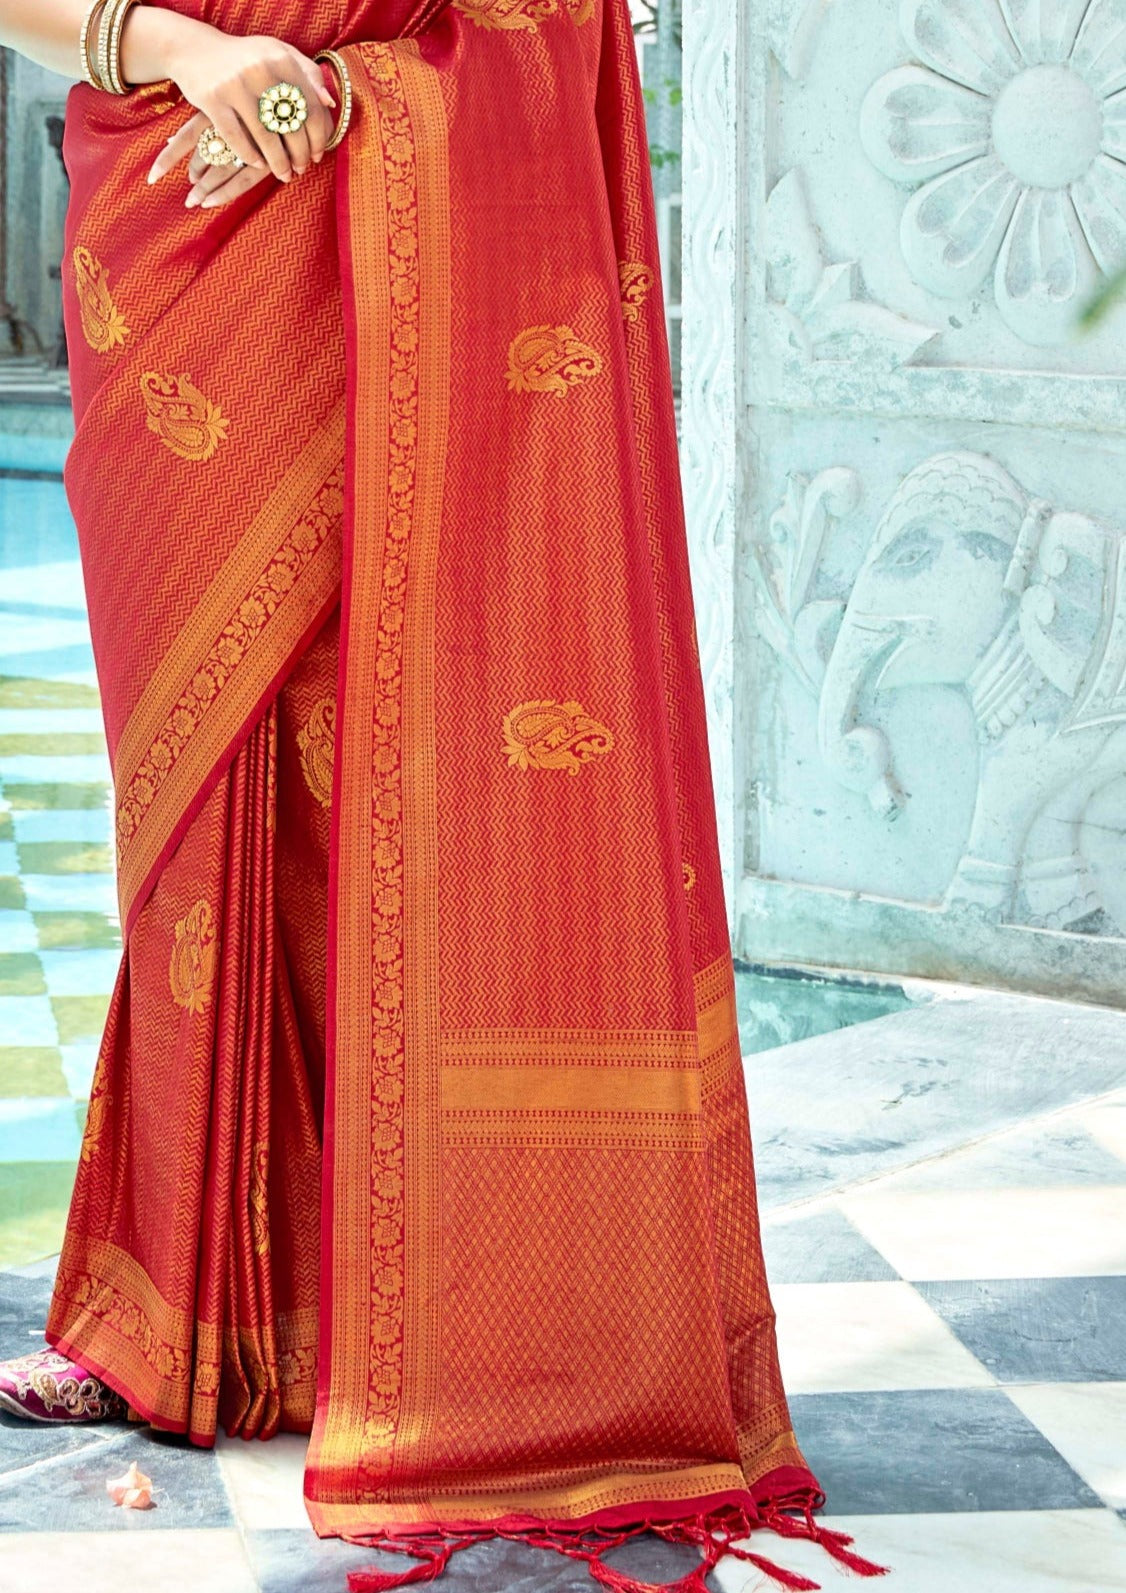 Pure kanjivaram silk red handloom bridal saree online shopping with price india.